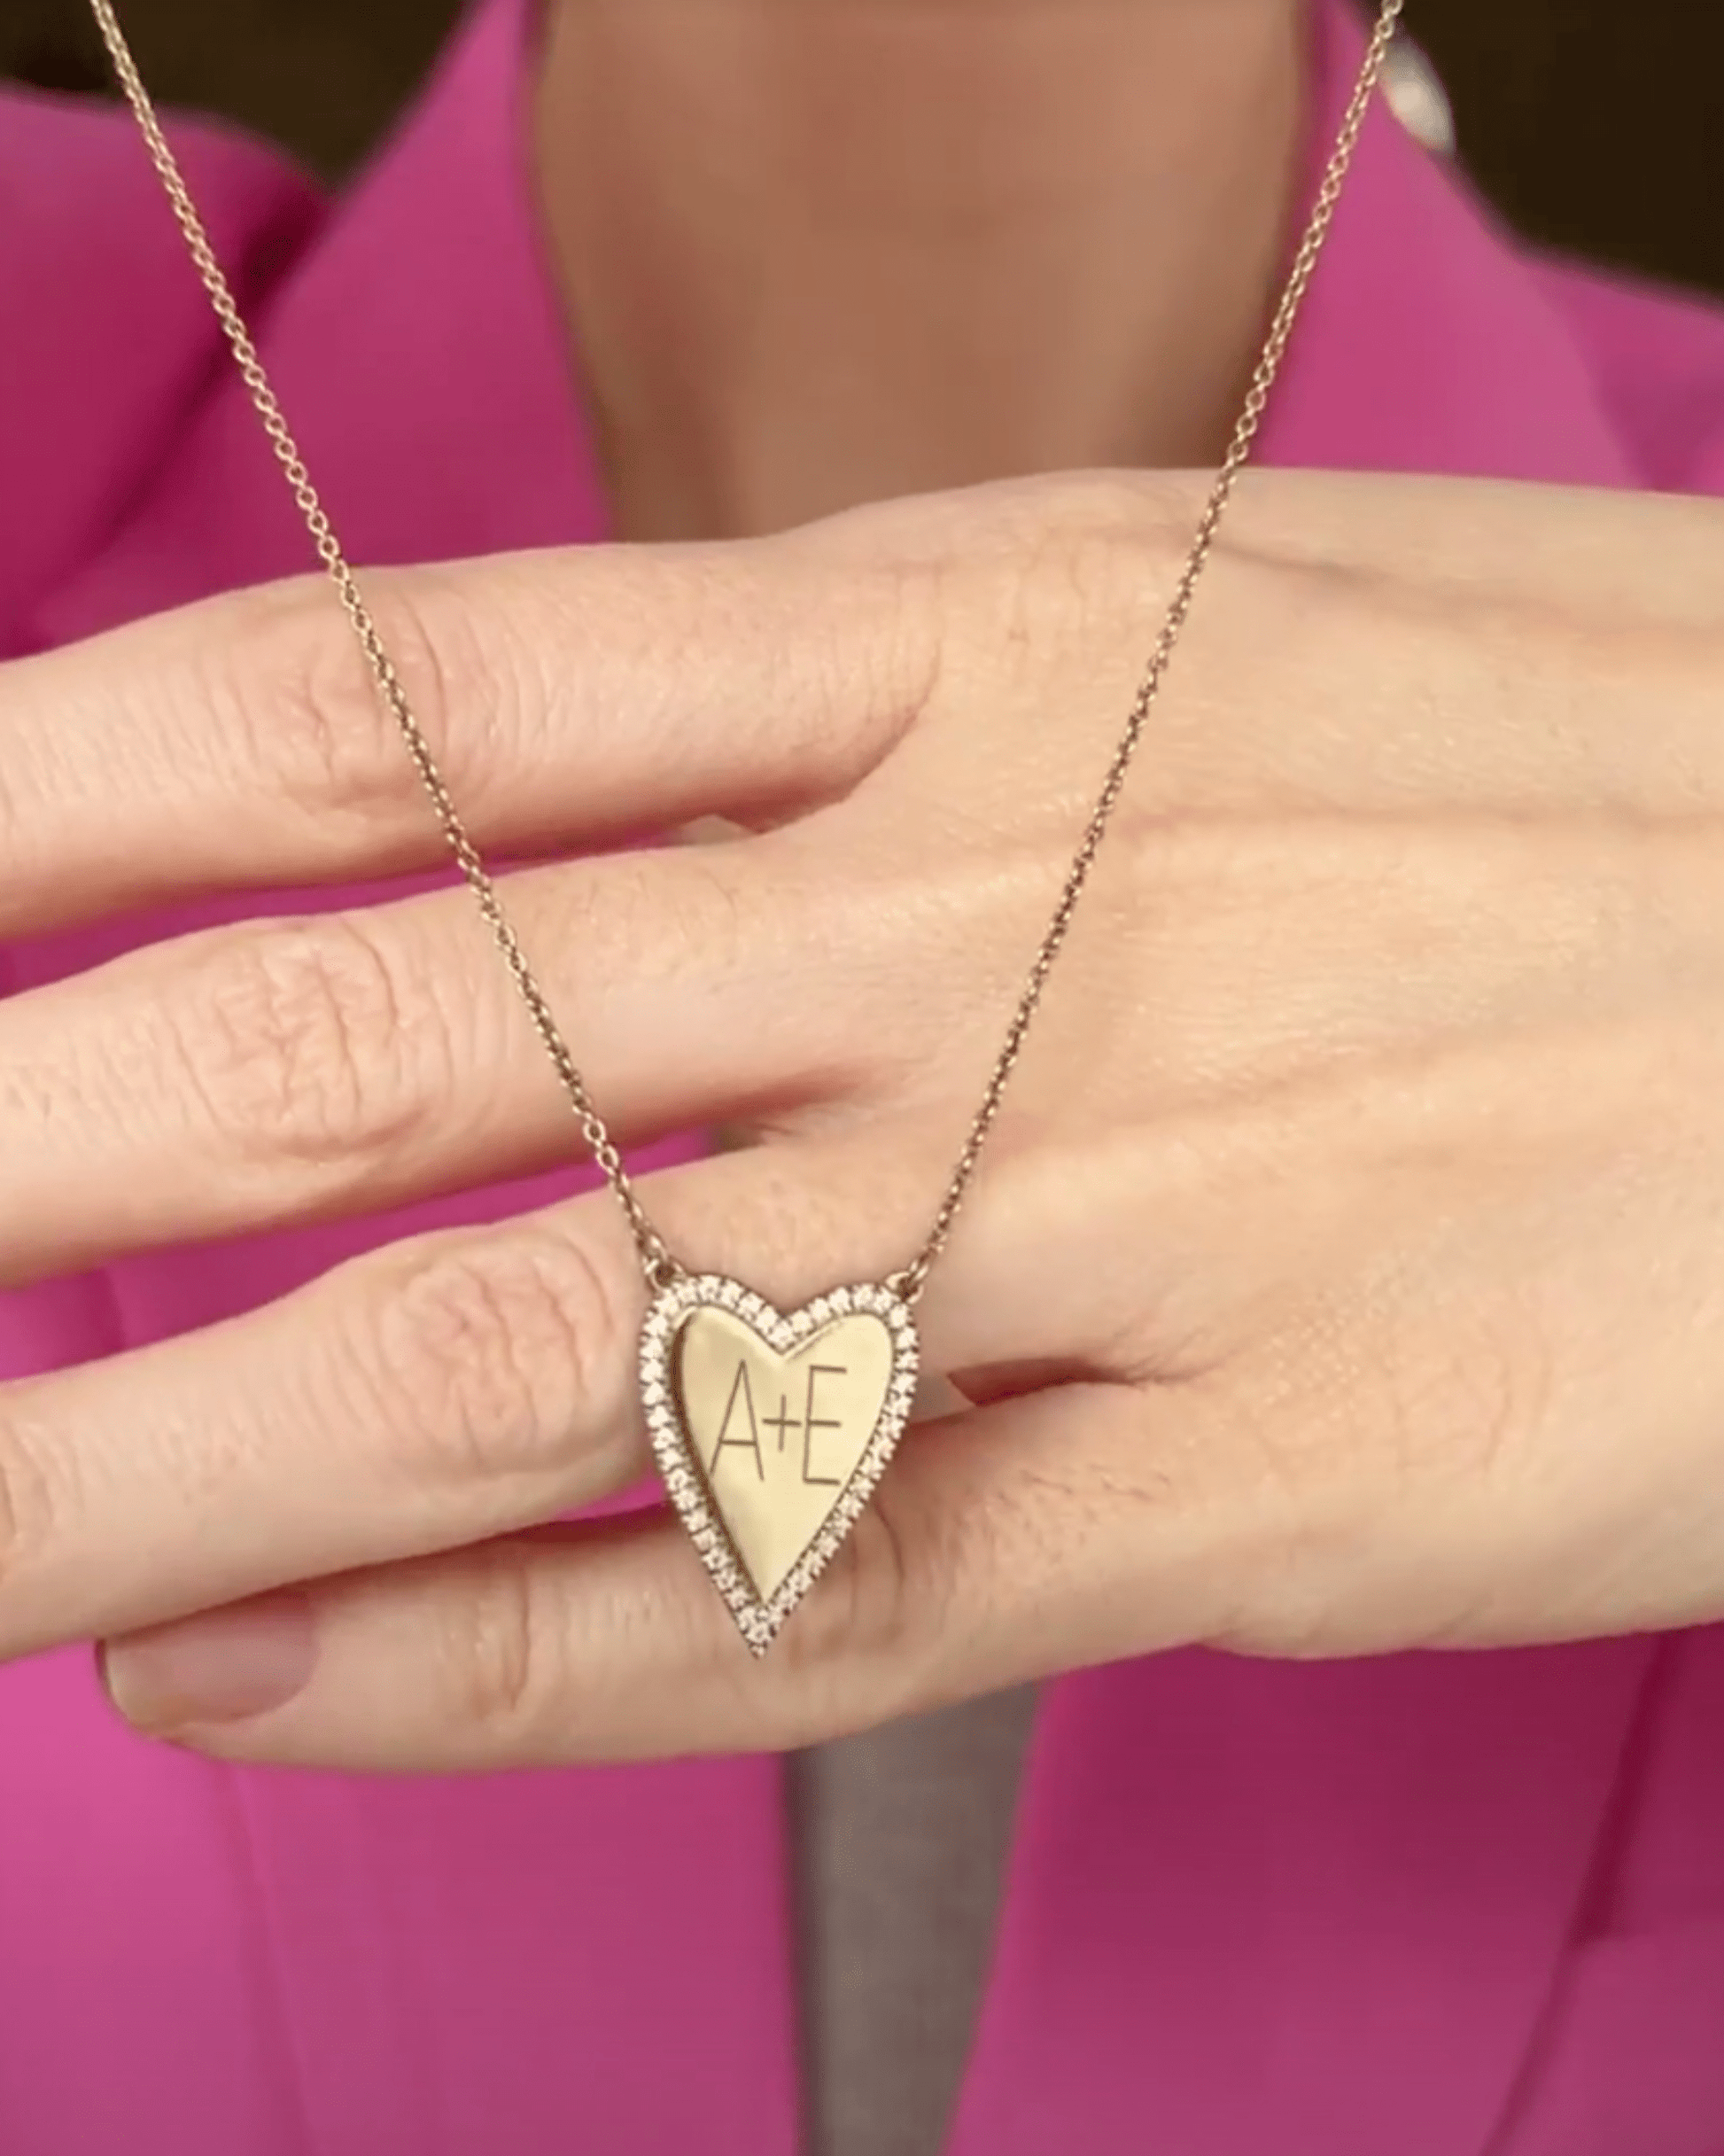 Engravable Outlined Heart Diamond Necklace - 18K Gold Vermeil Necklaces magal-dev 